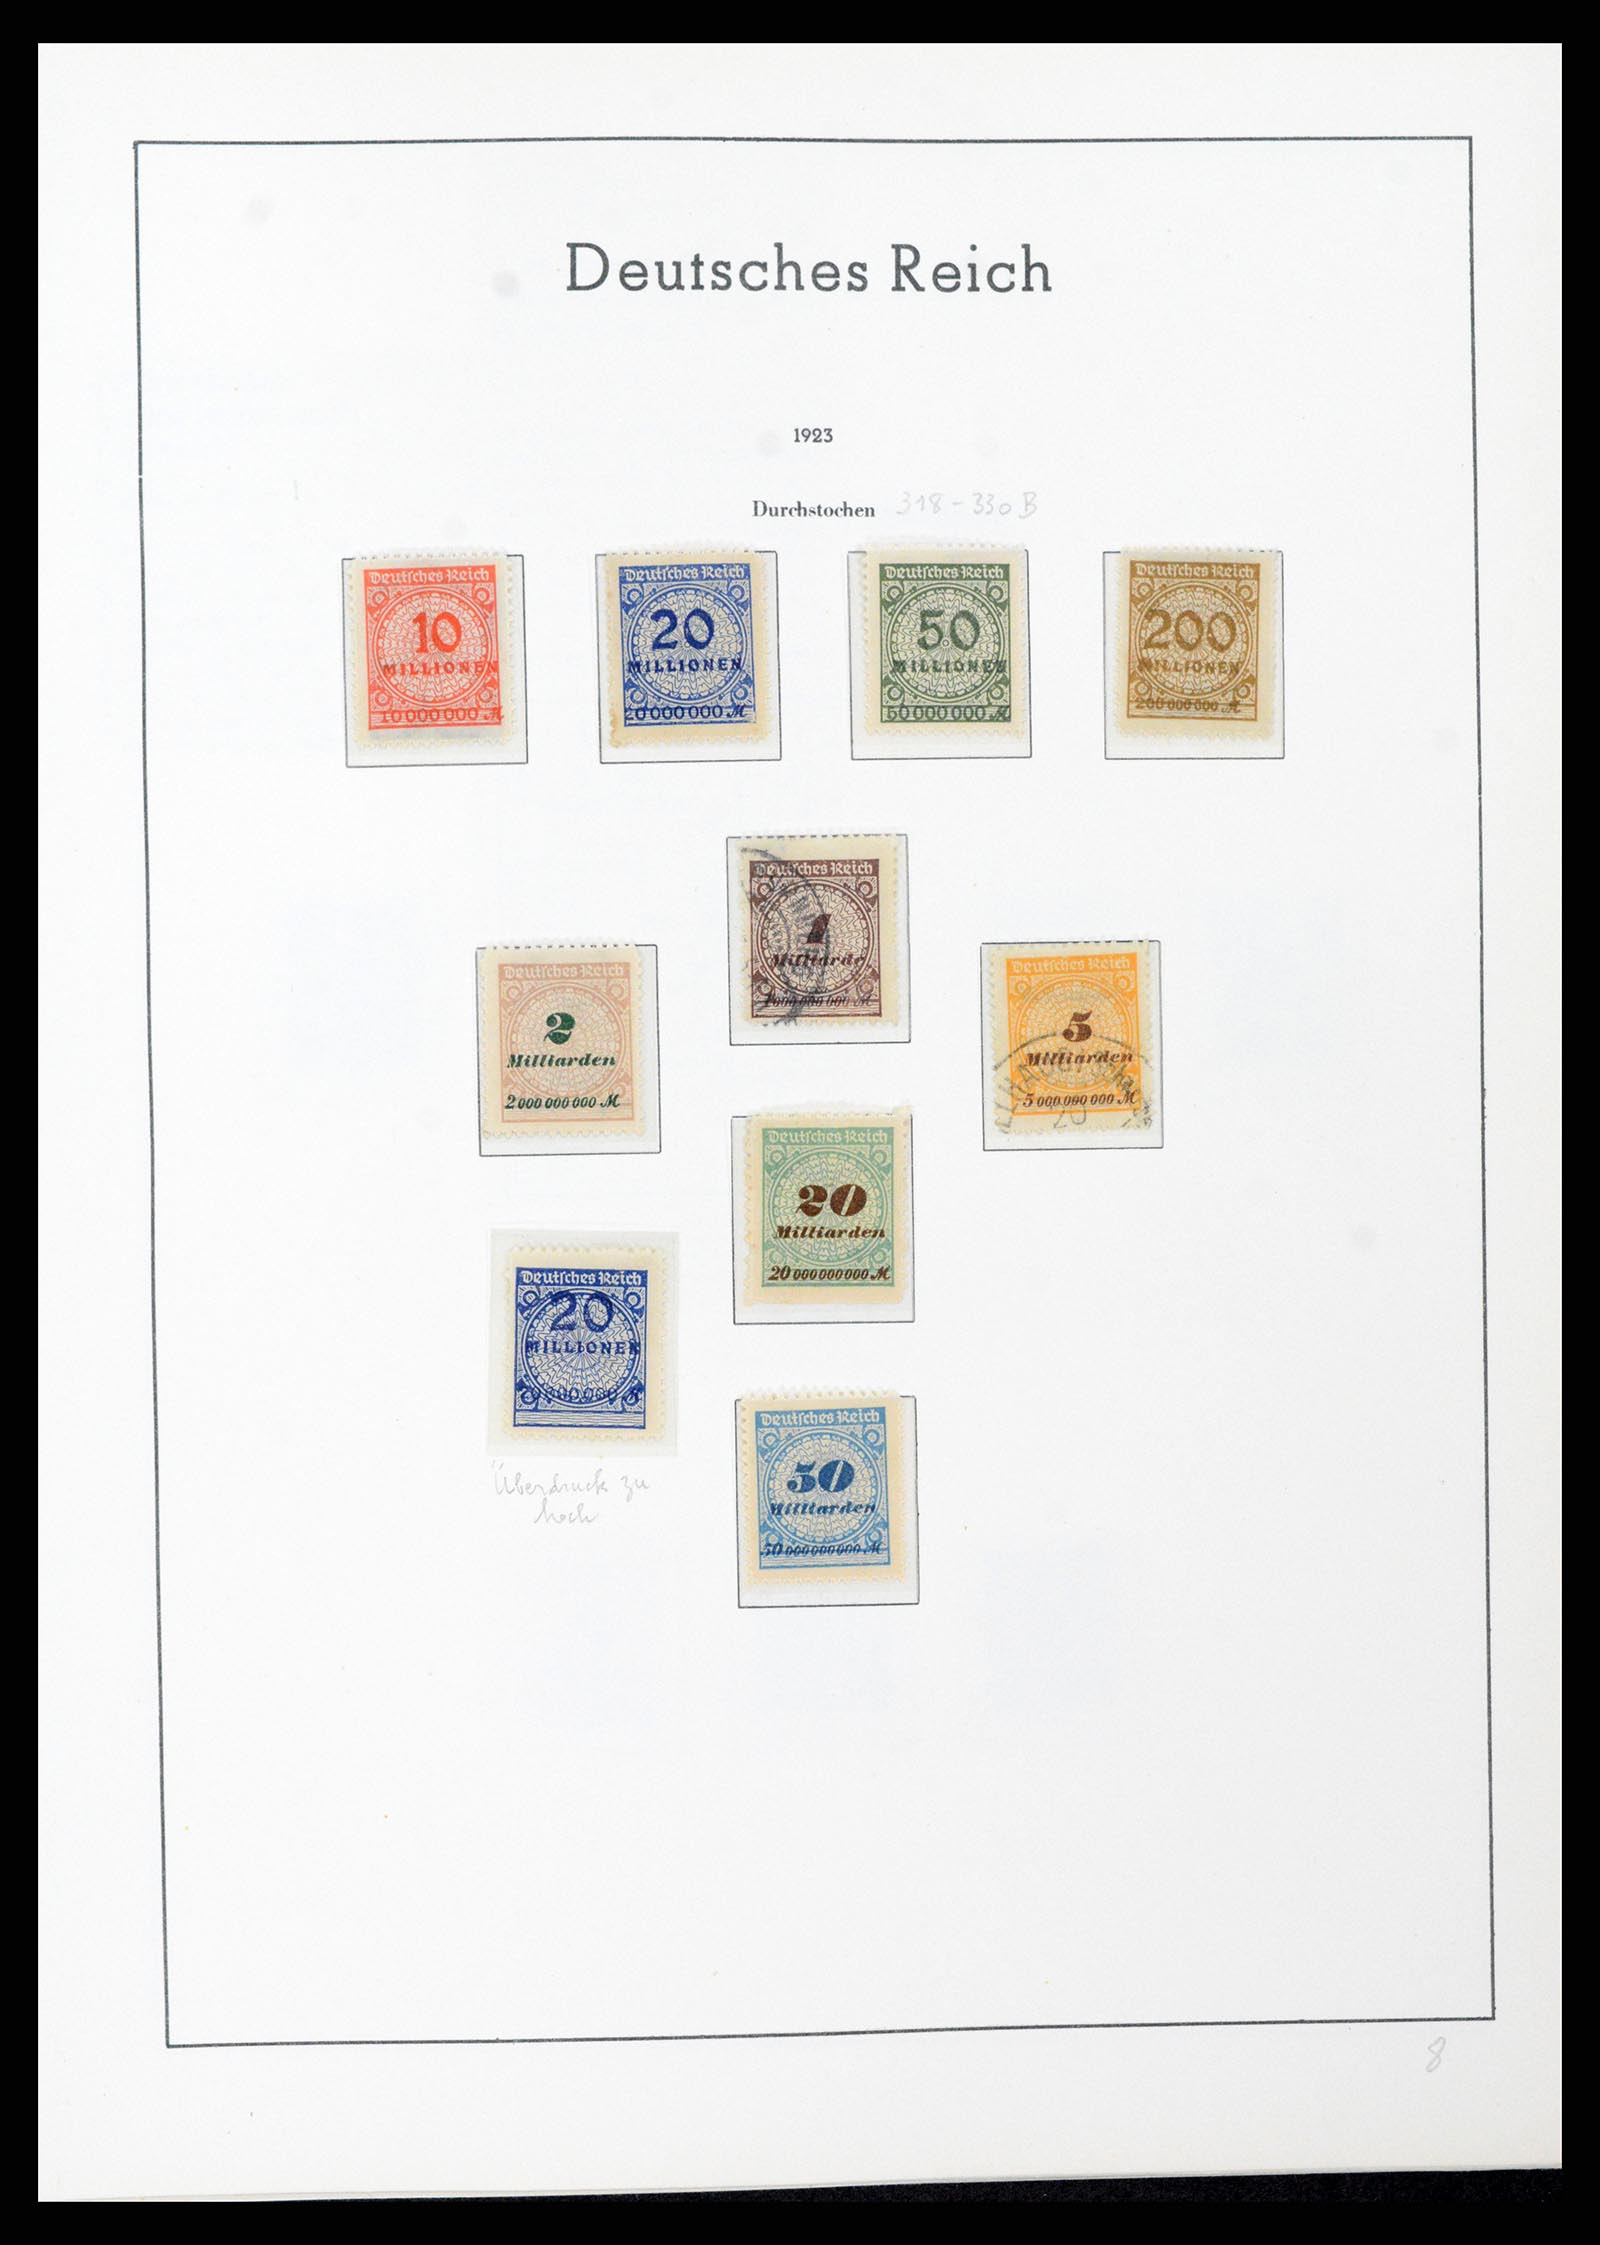 37589 031 - Stamp collection 37589 German Reich 1872-1945.